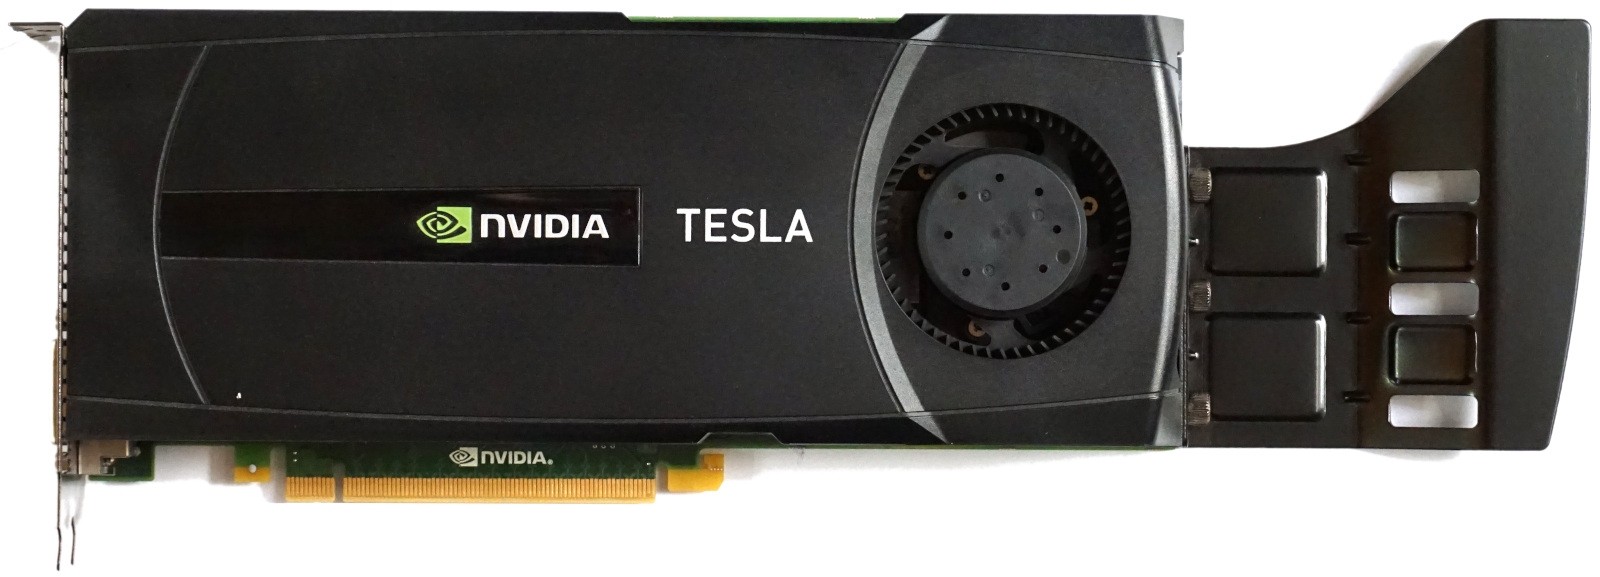 Dell nVidia Tesla C2050 - 3GB GDDR5 PCIe-x16 FH Computing Processor